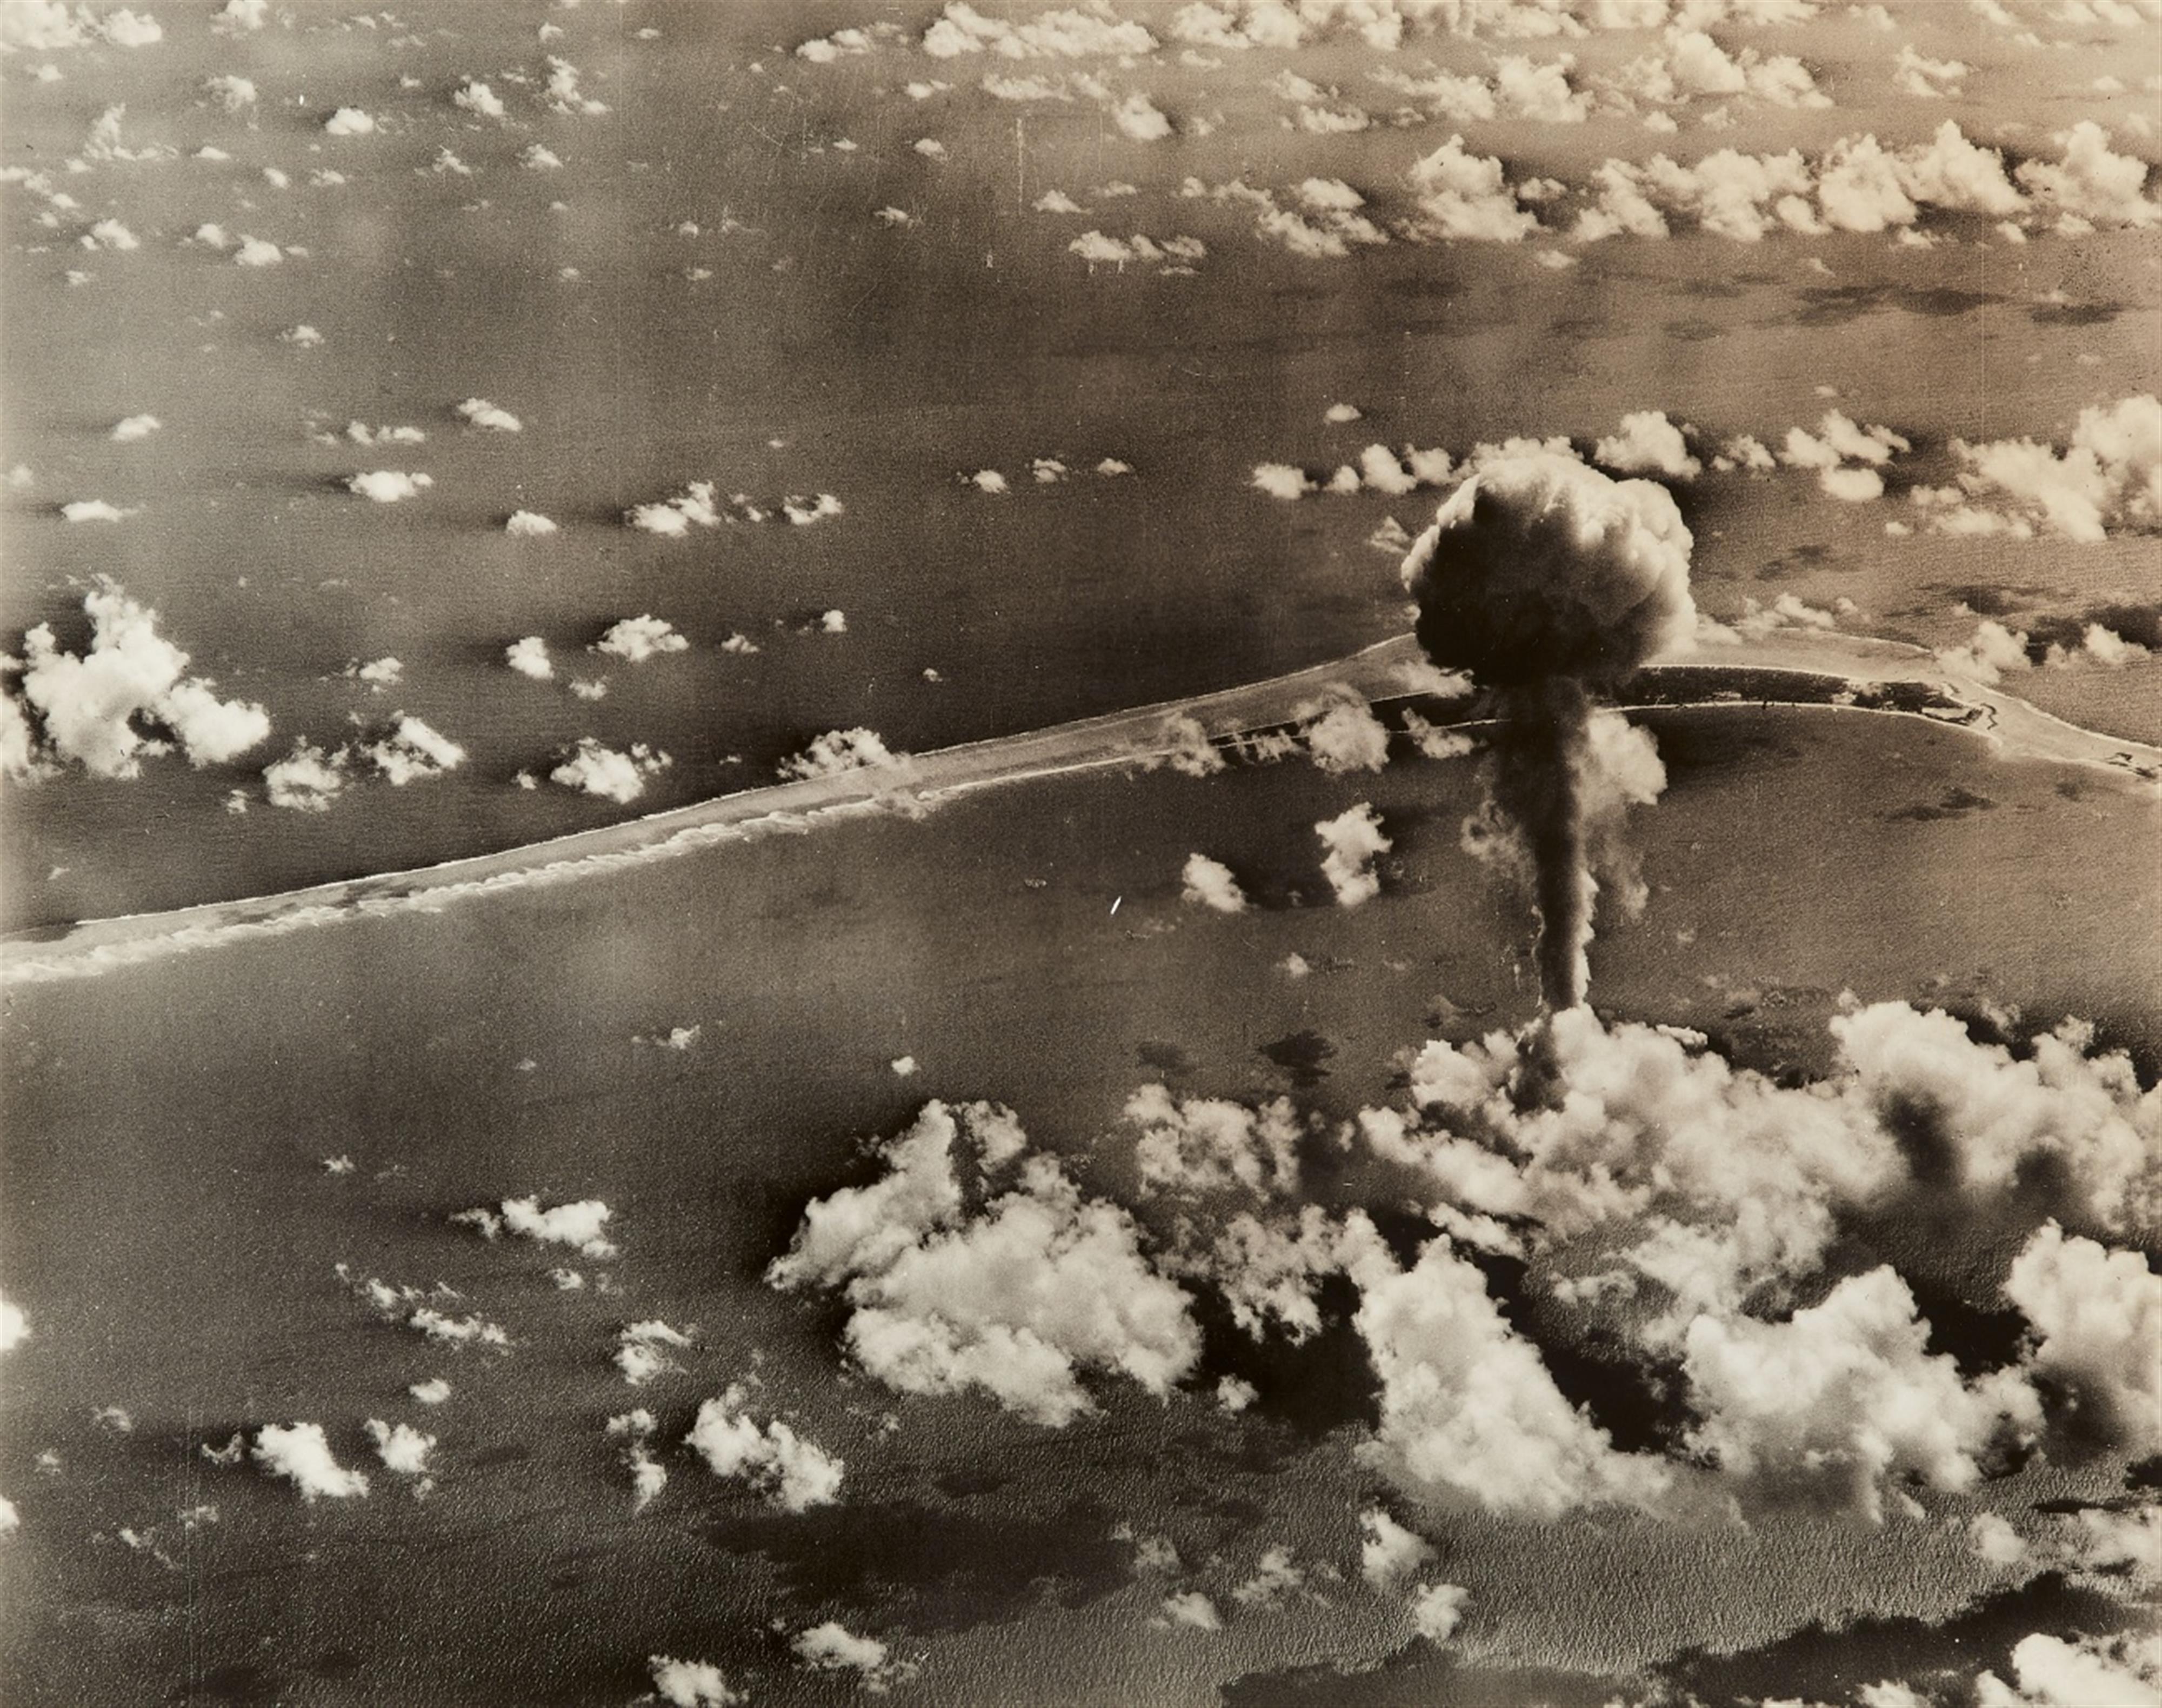 Joint Army Task Force One Photo - "Operation Crossroads" - Aufnahmen der Atombomben-Tests auf dem Bikini-Atoll - image-7